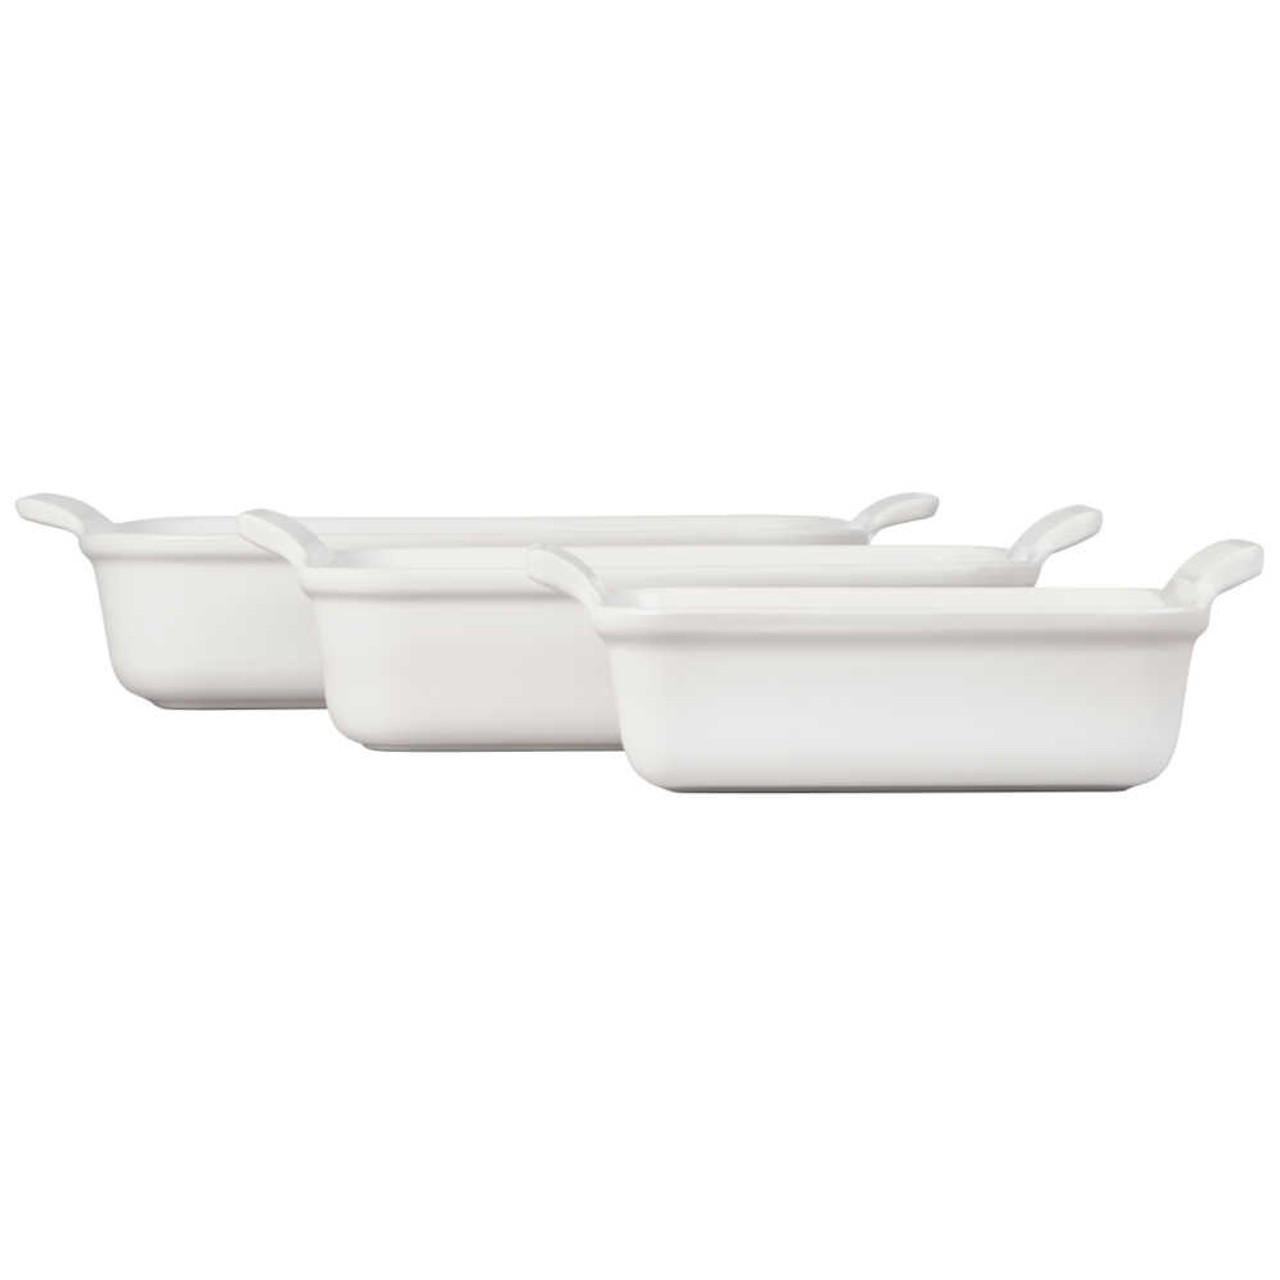 Le Creuset Heritage Set of 3 Rectangular Dishes - White